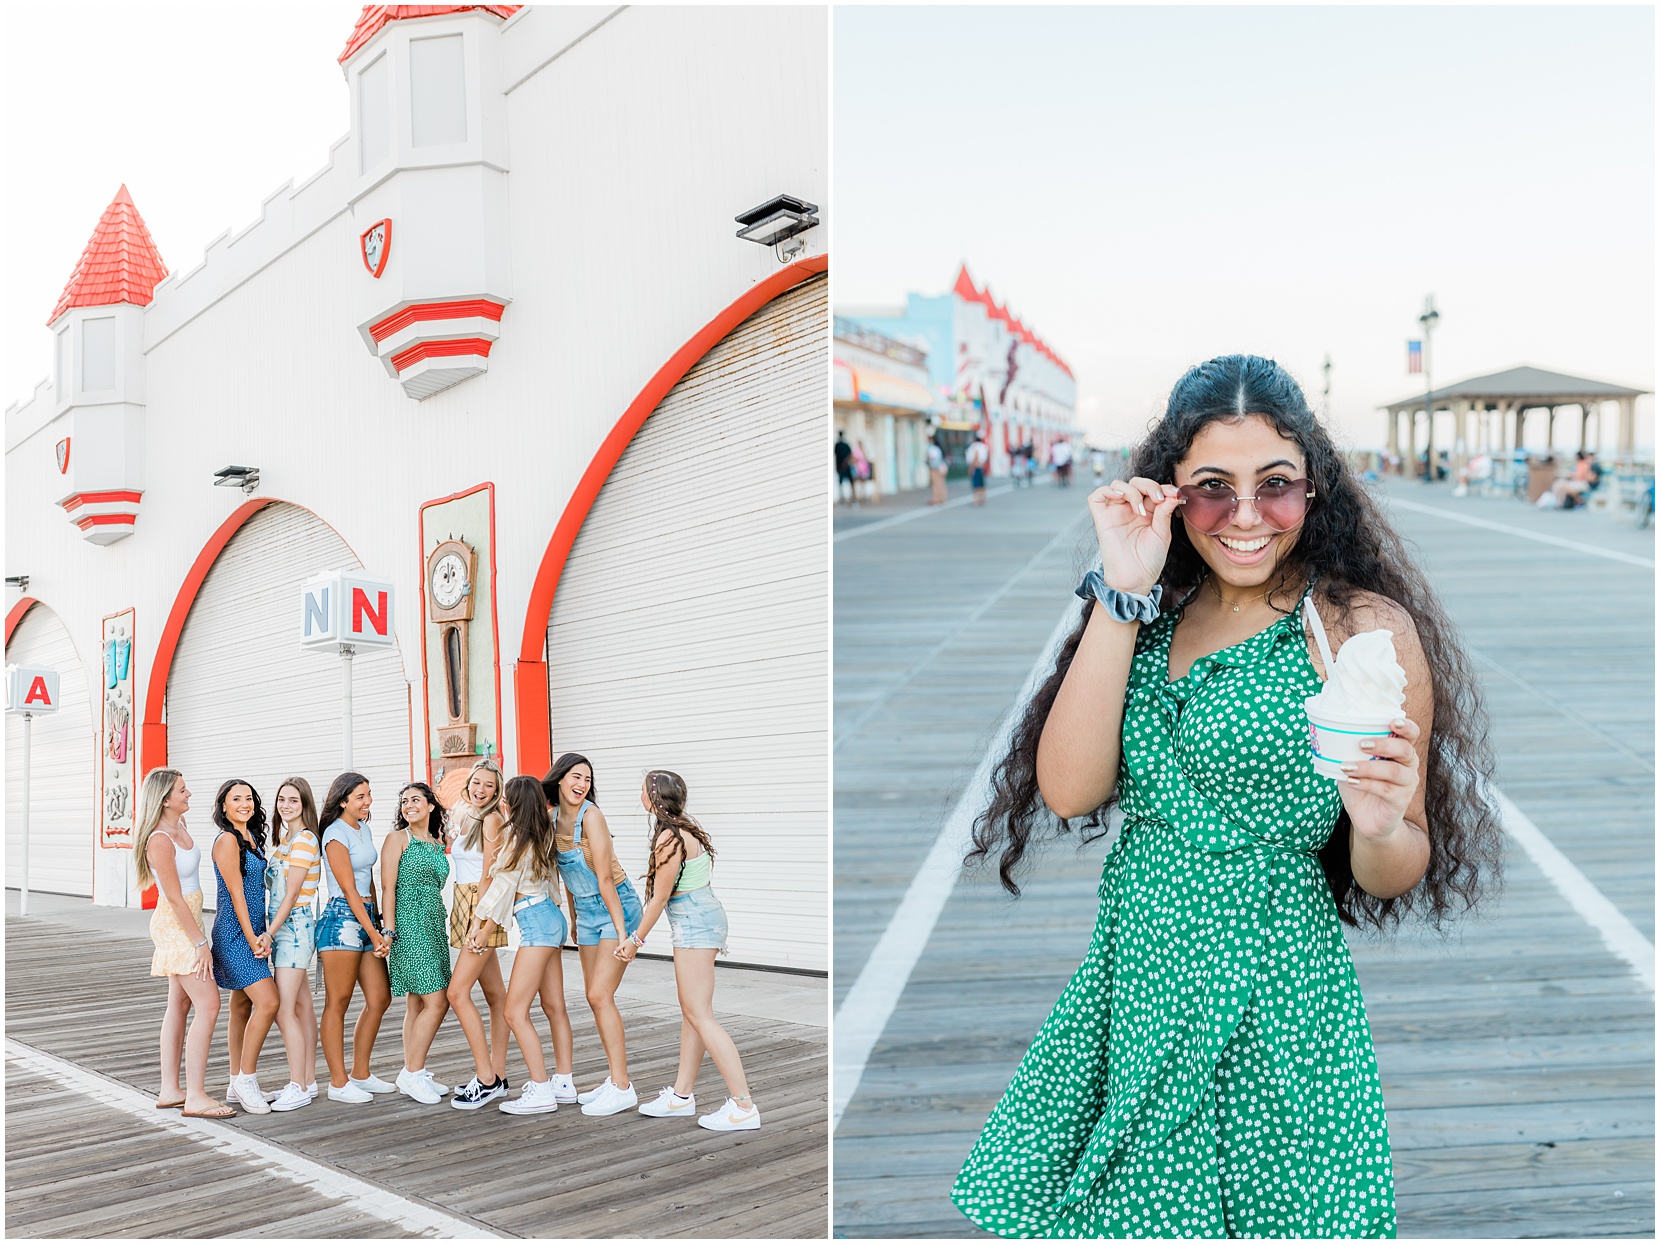 nicole marie photography's senior model team posing on the boardwalk with ice cream